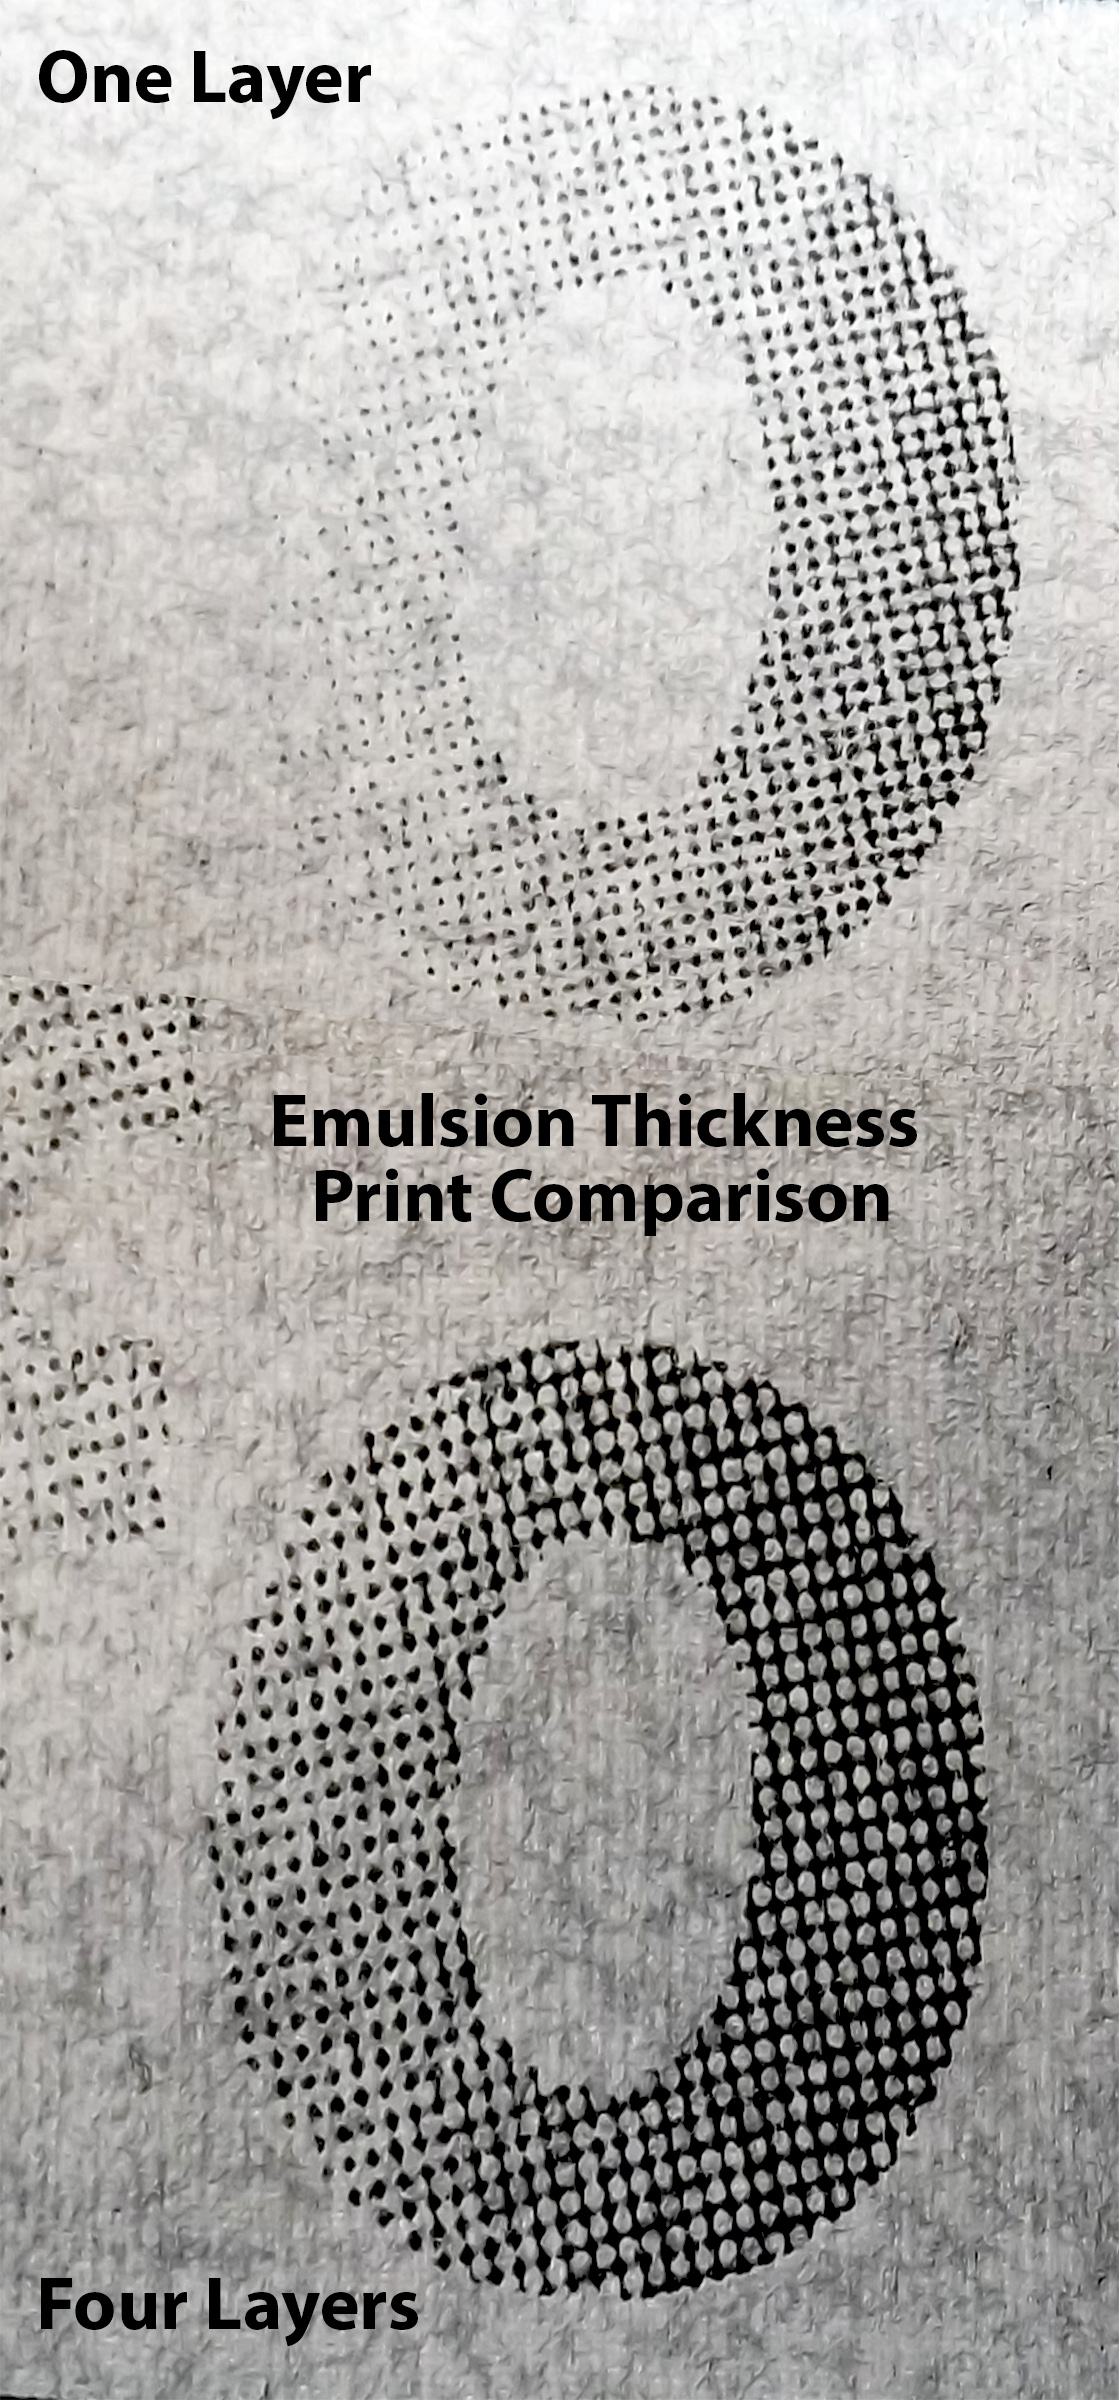 Print showing low emulsion vs good emulsion coverage